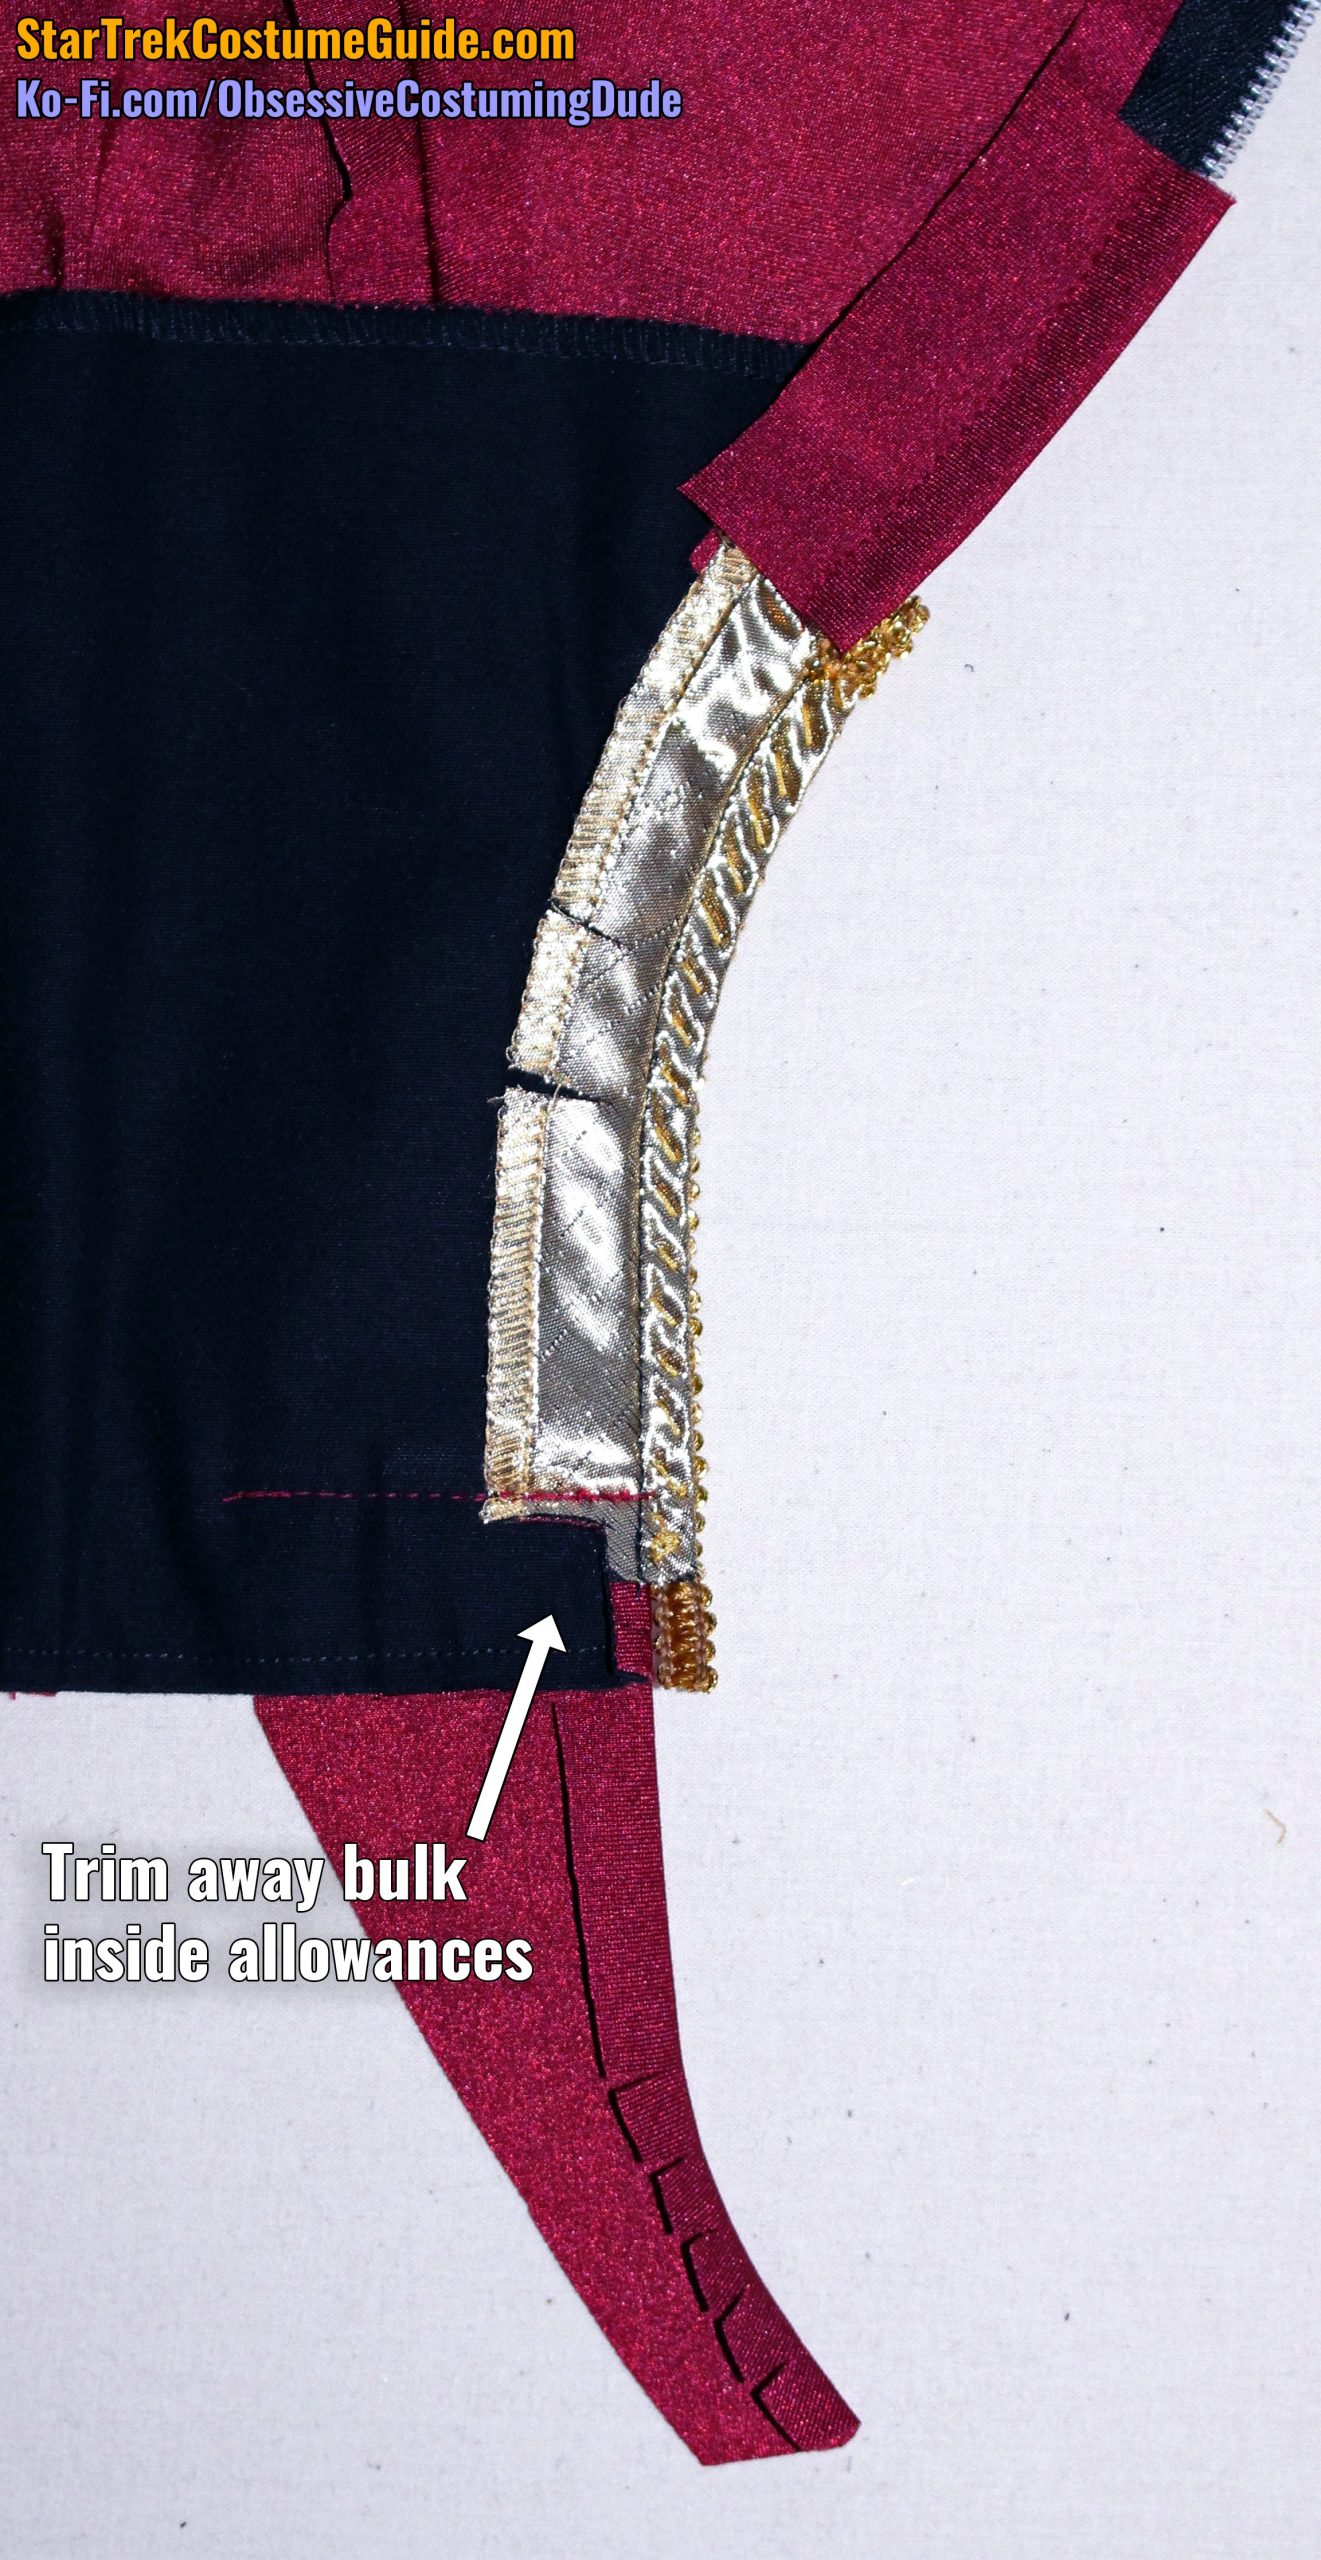 TNG admiral uniform (season 1) sewing tutorial - Star Trek Costume Guide